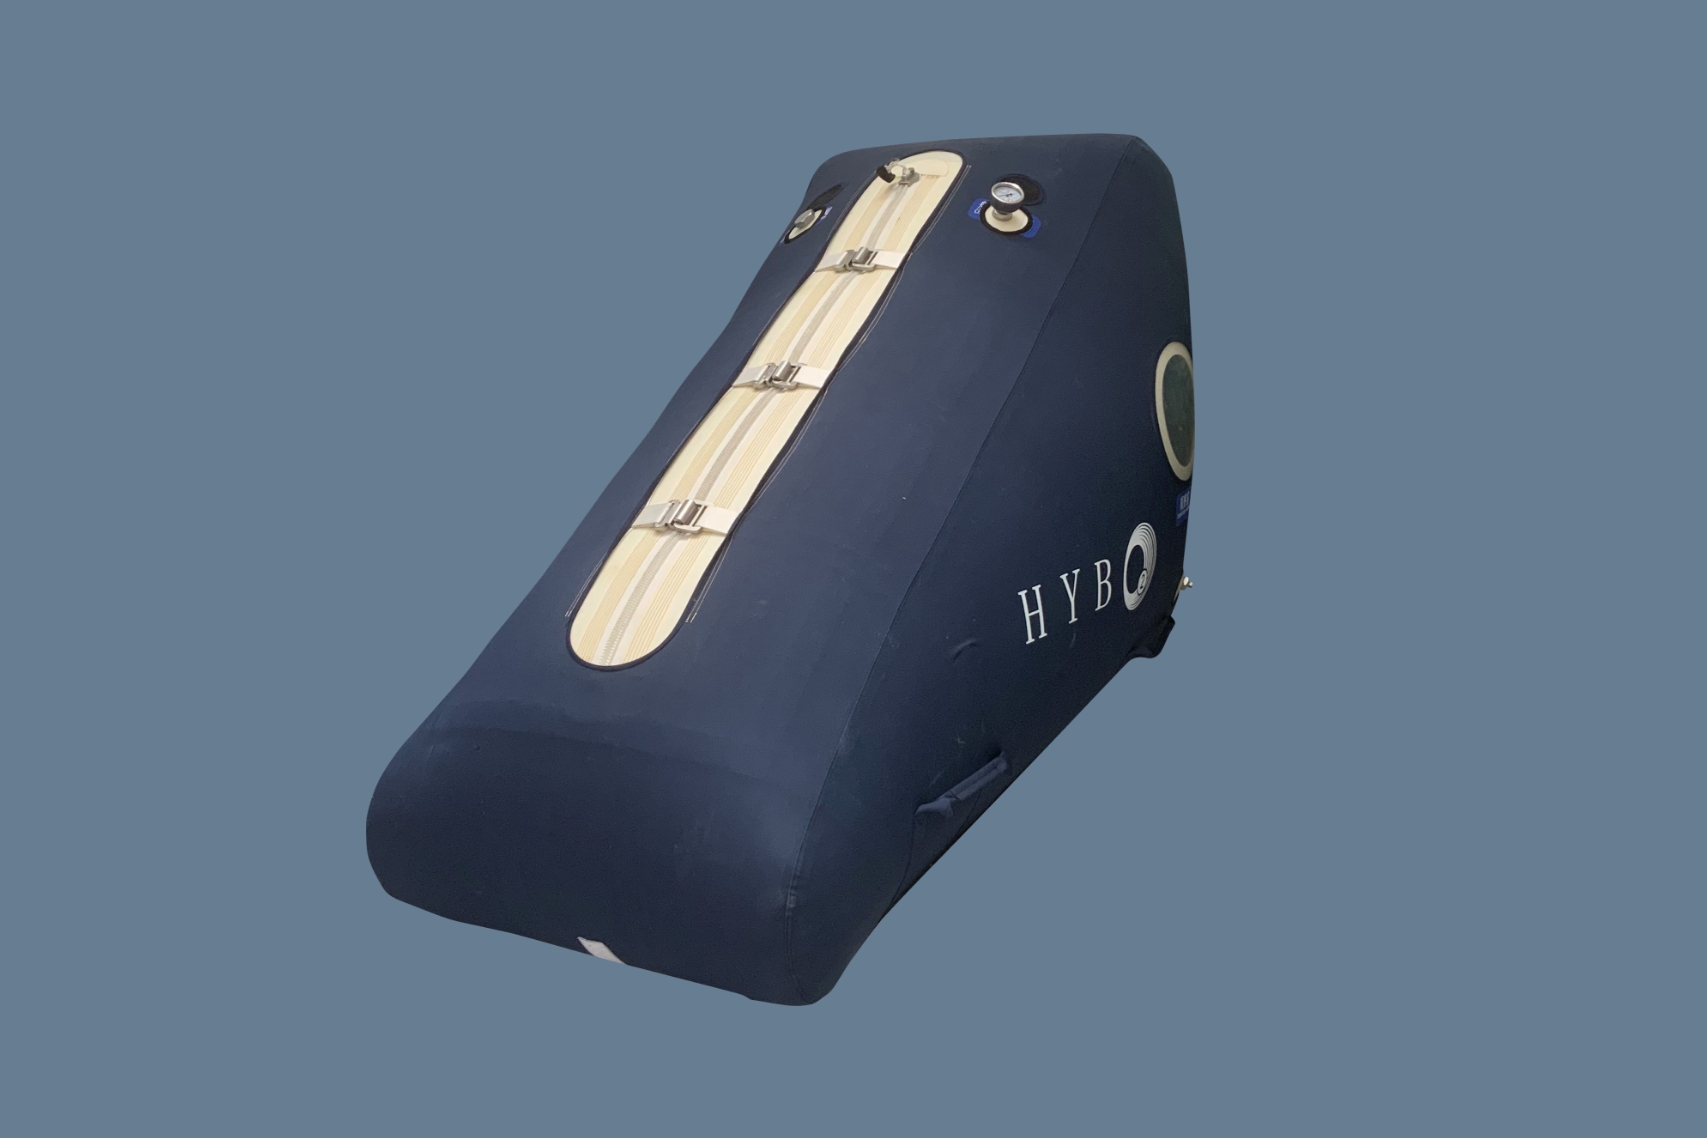 HybO2 Portable Monoplace Soft-shell​